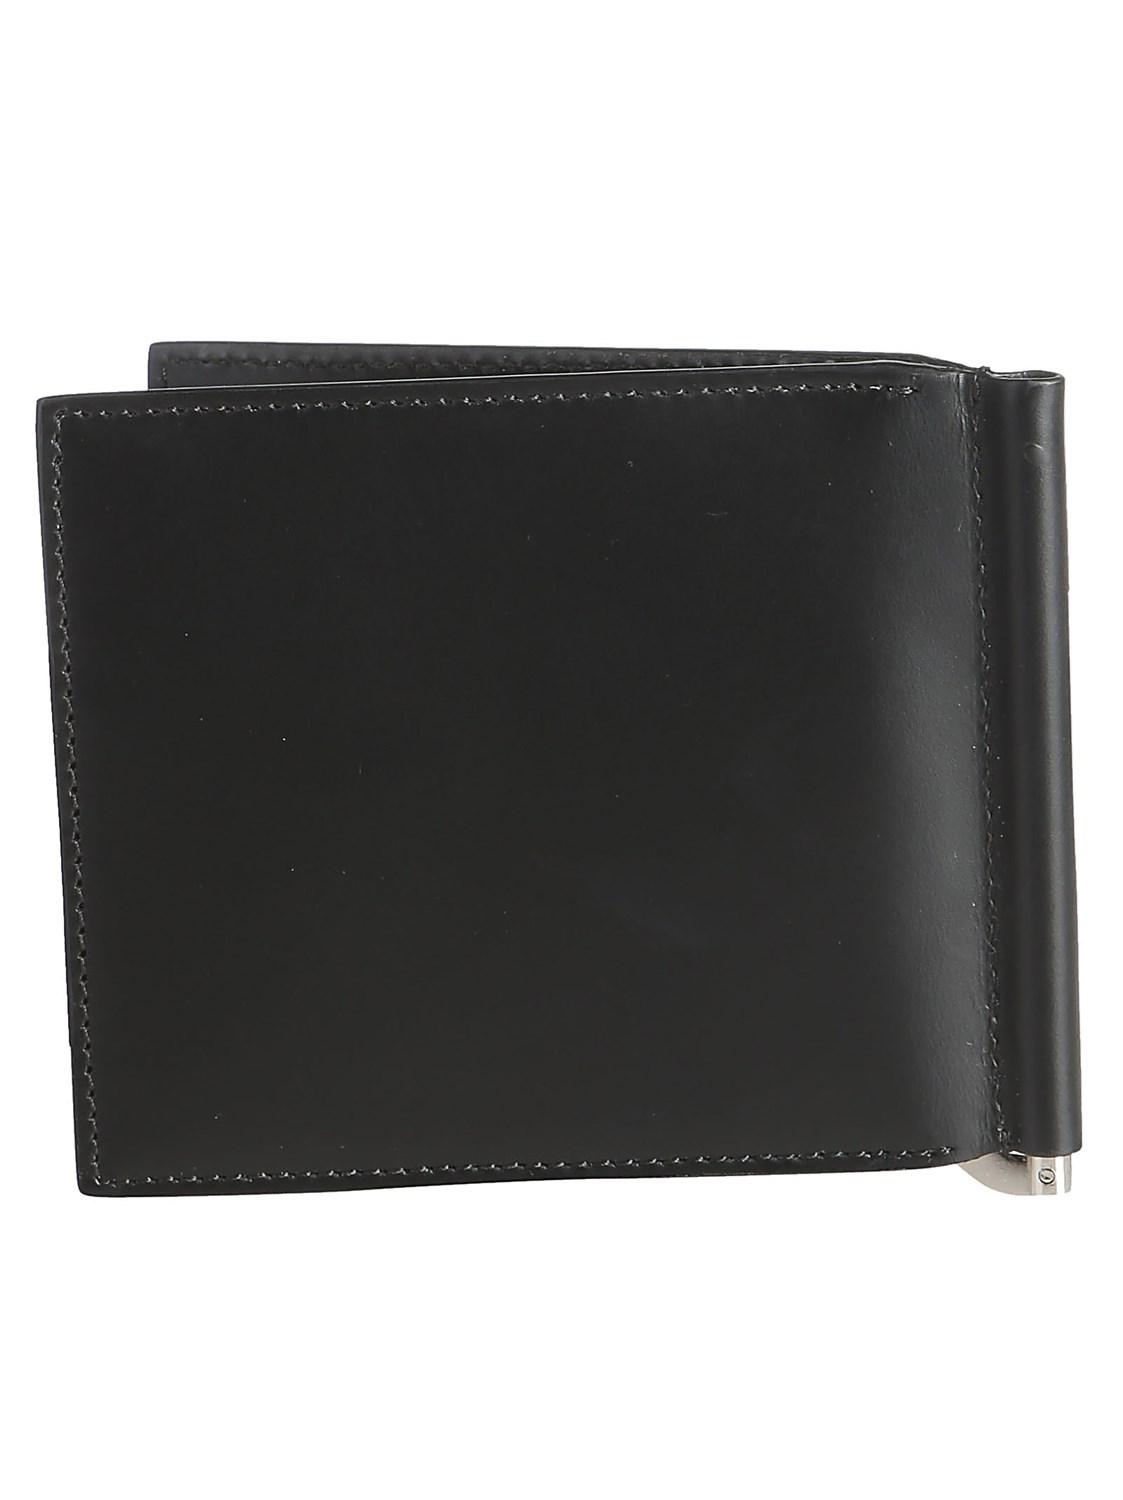 Givenchy Leather Logo Print Billfold Clip Wallet in Black for Men - Lyst